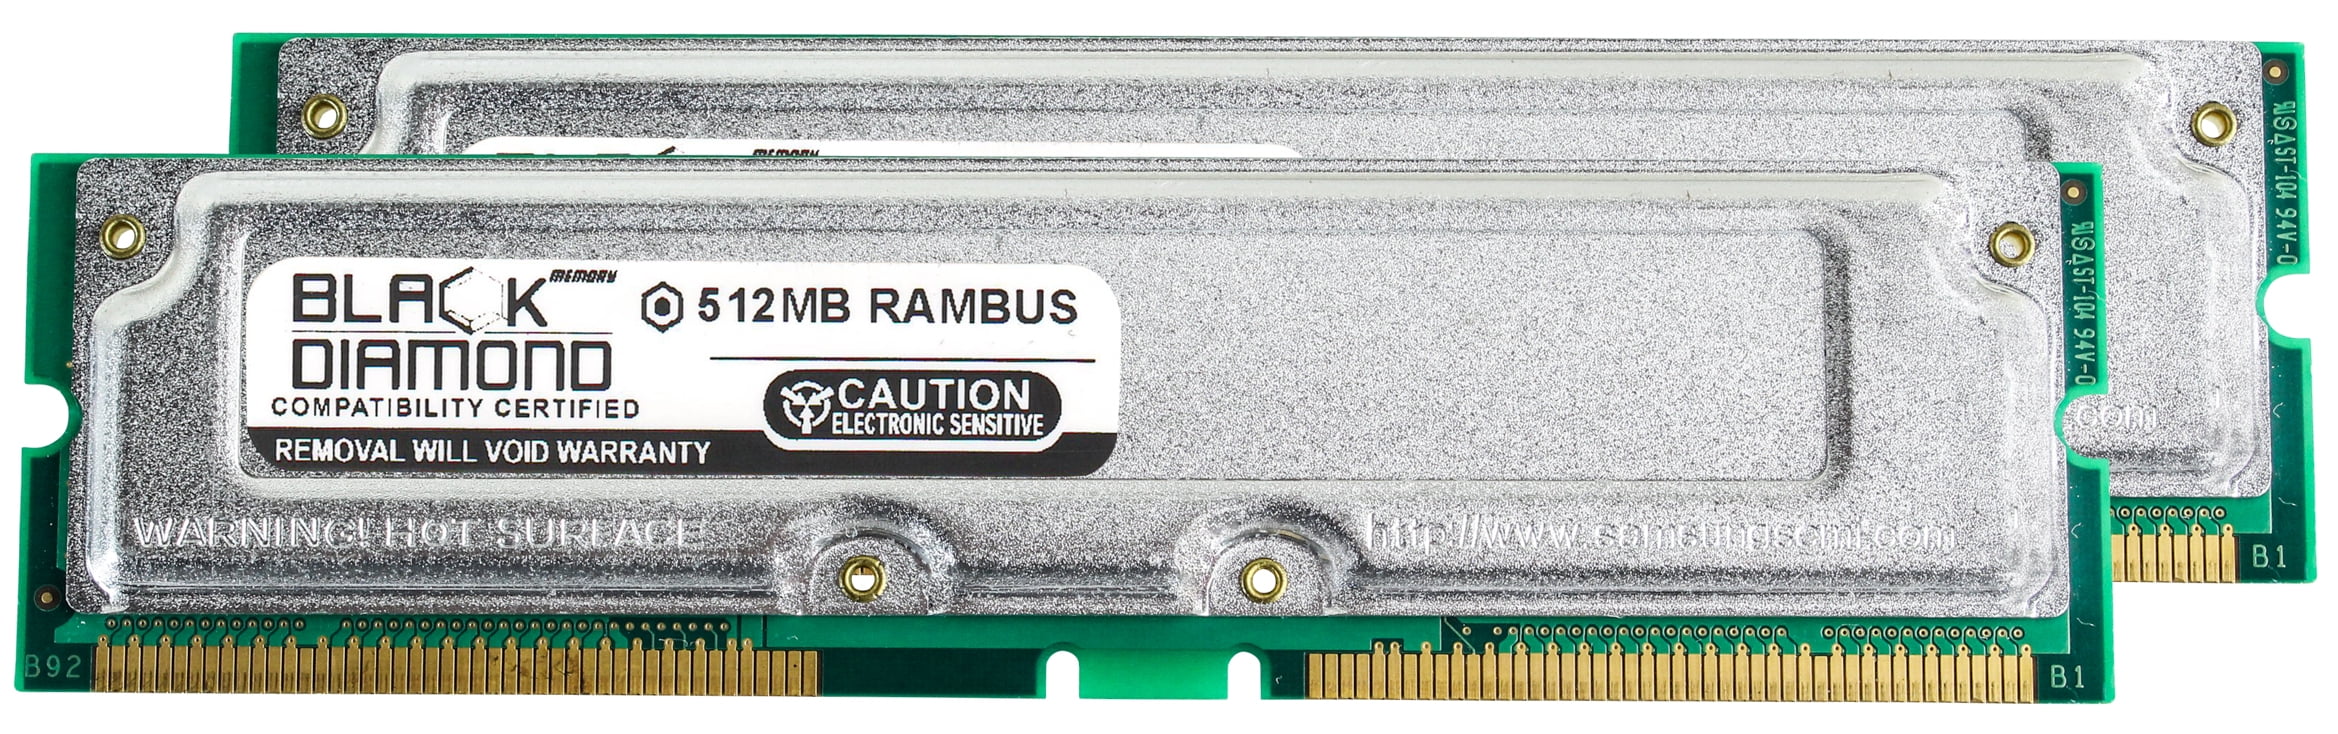 1GB 2X512MB RAM Memory for Dell Precision Workstation 530 2.2G Black Diamond Memory Module 184pin PC800 45ns 800MHz Rambus RDRAM RIMM Upgrade